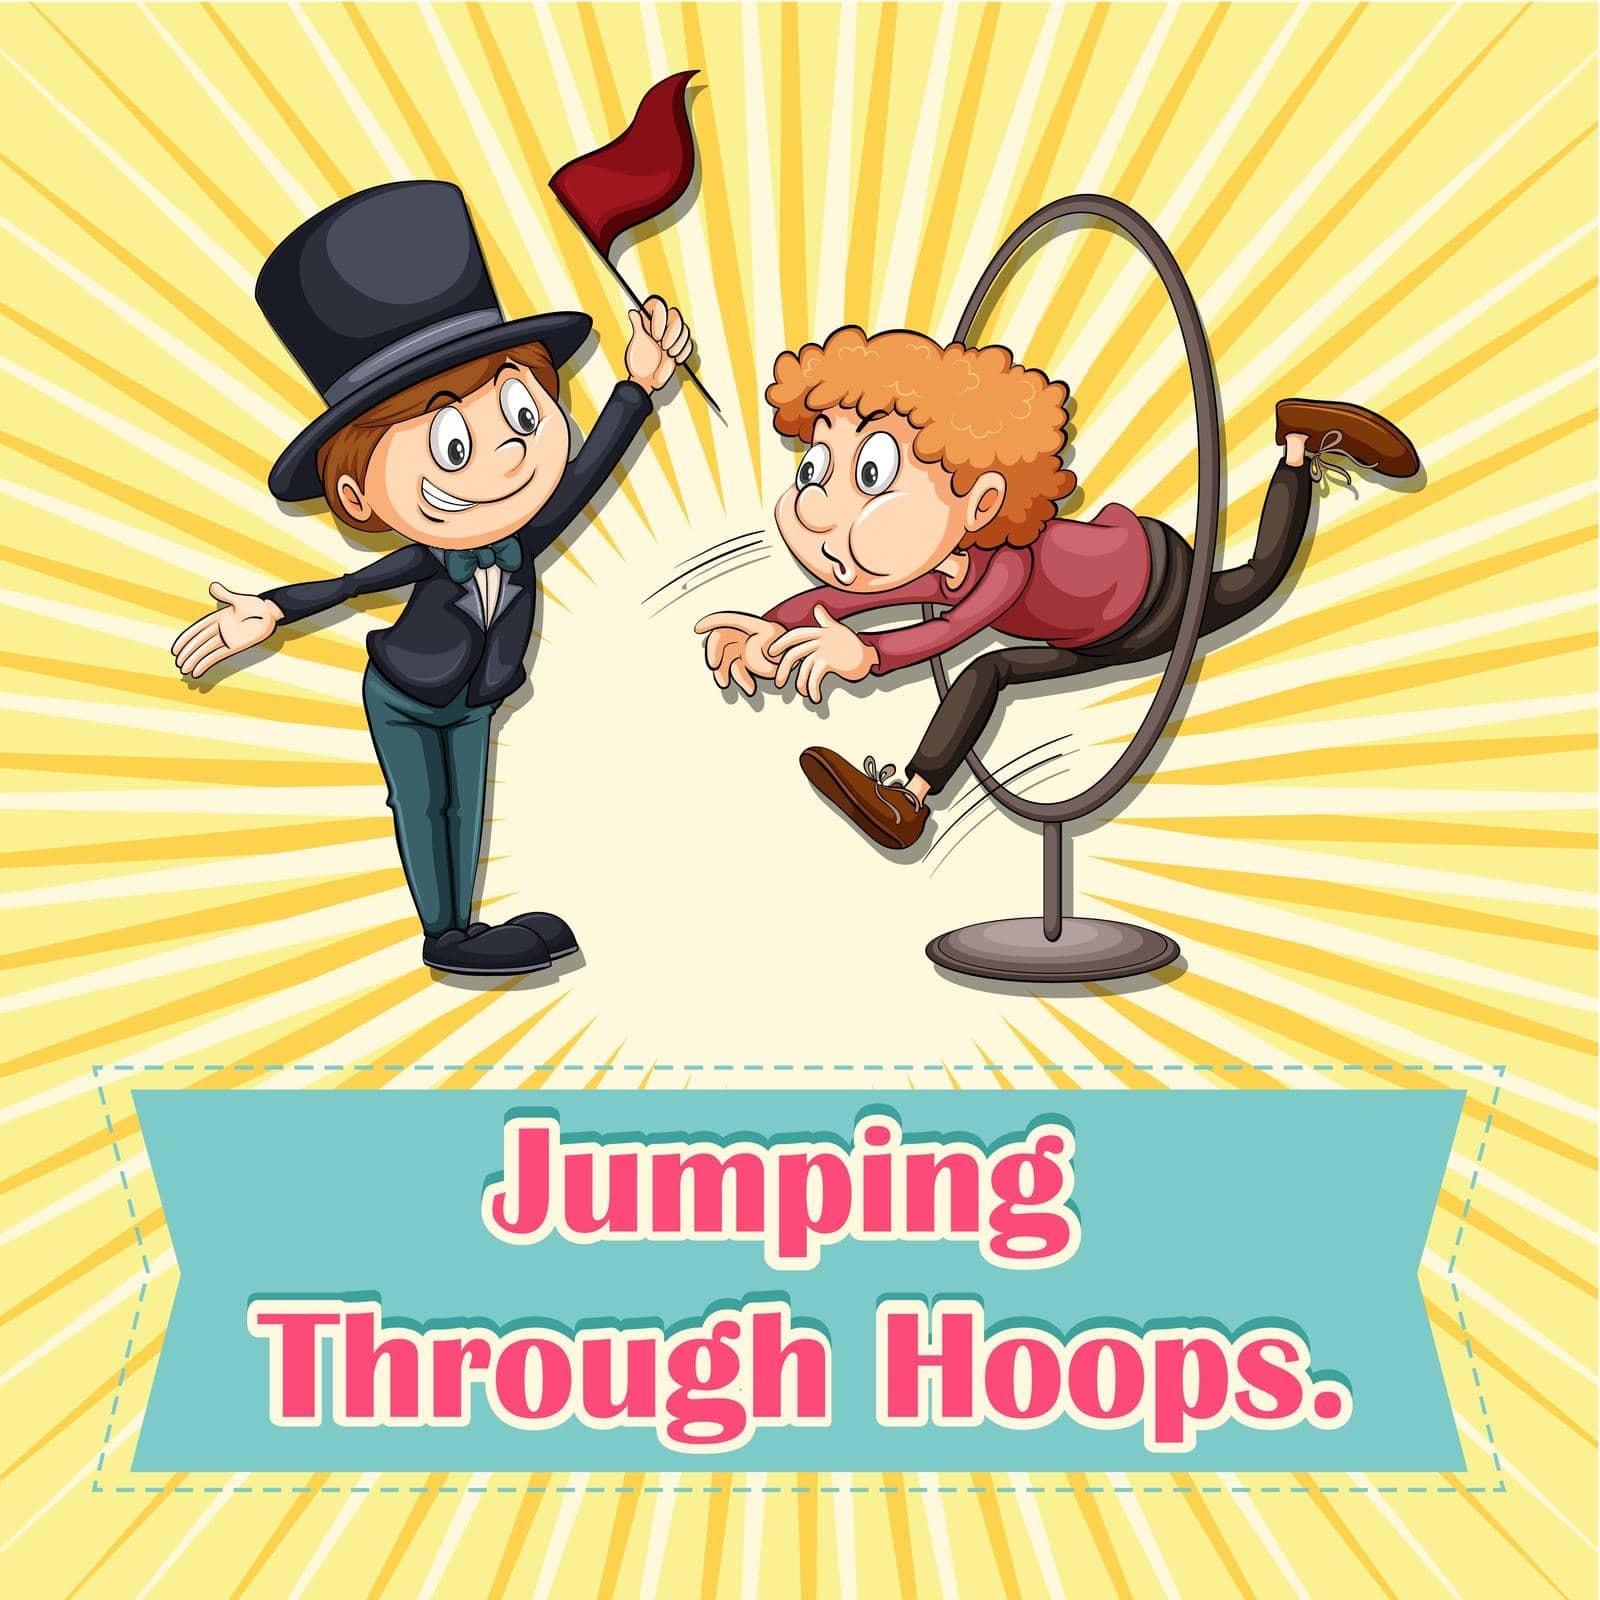 Jumping through hoops by iimages